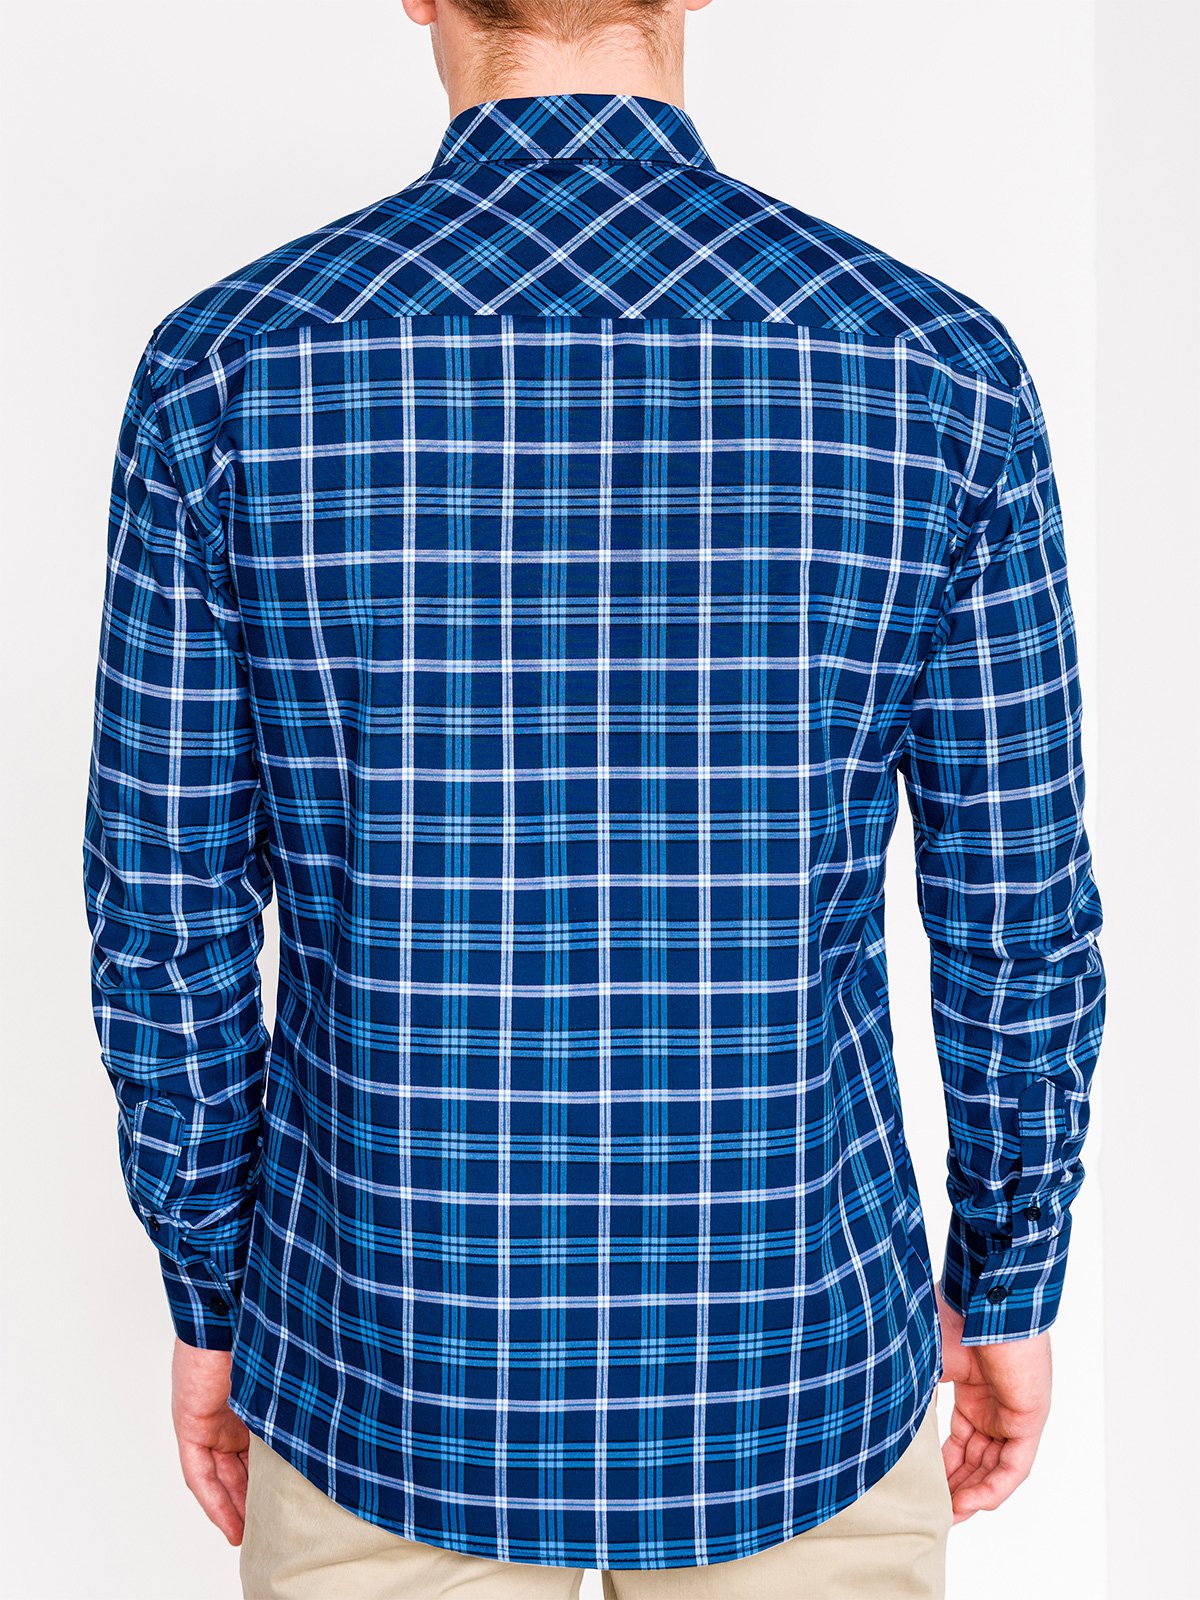 Men's check shirt with long sleeves K416 - navy/light blue | MODONE ...